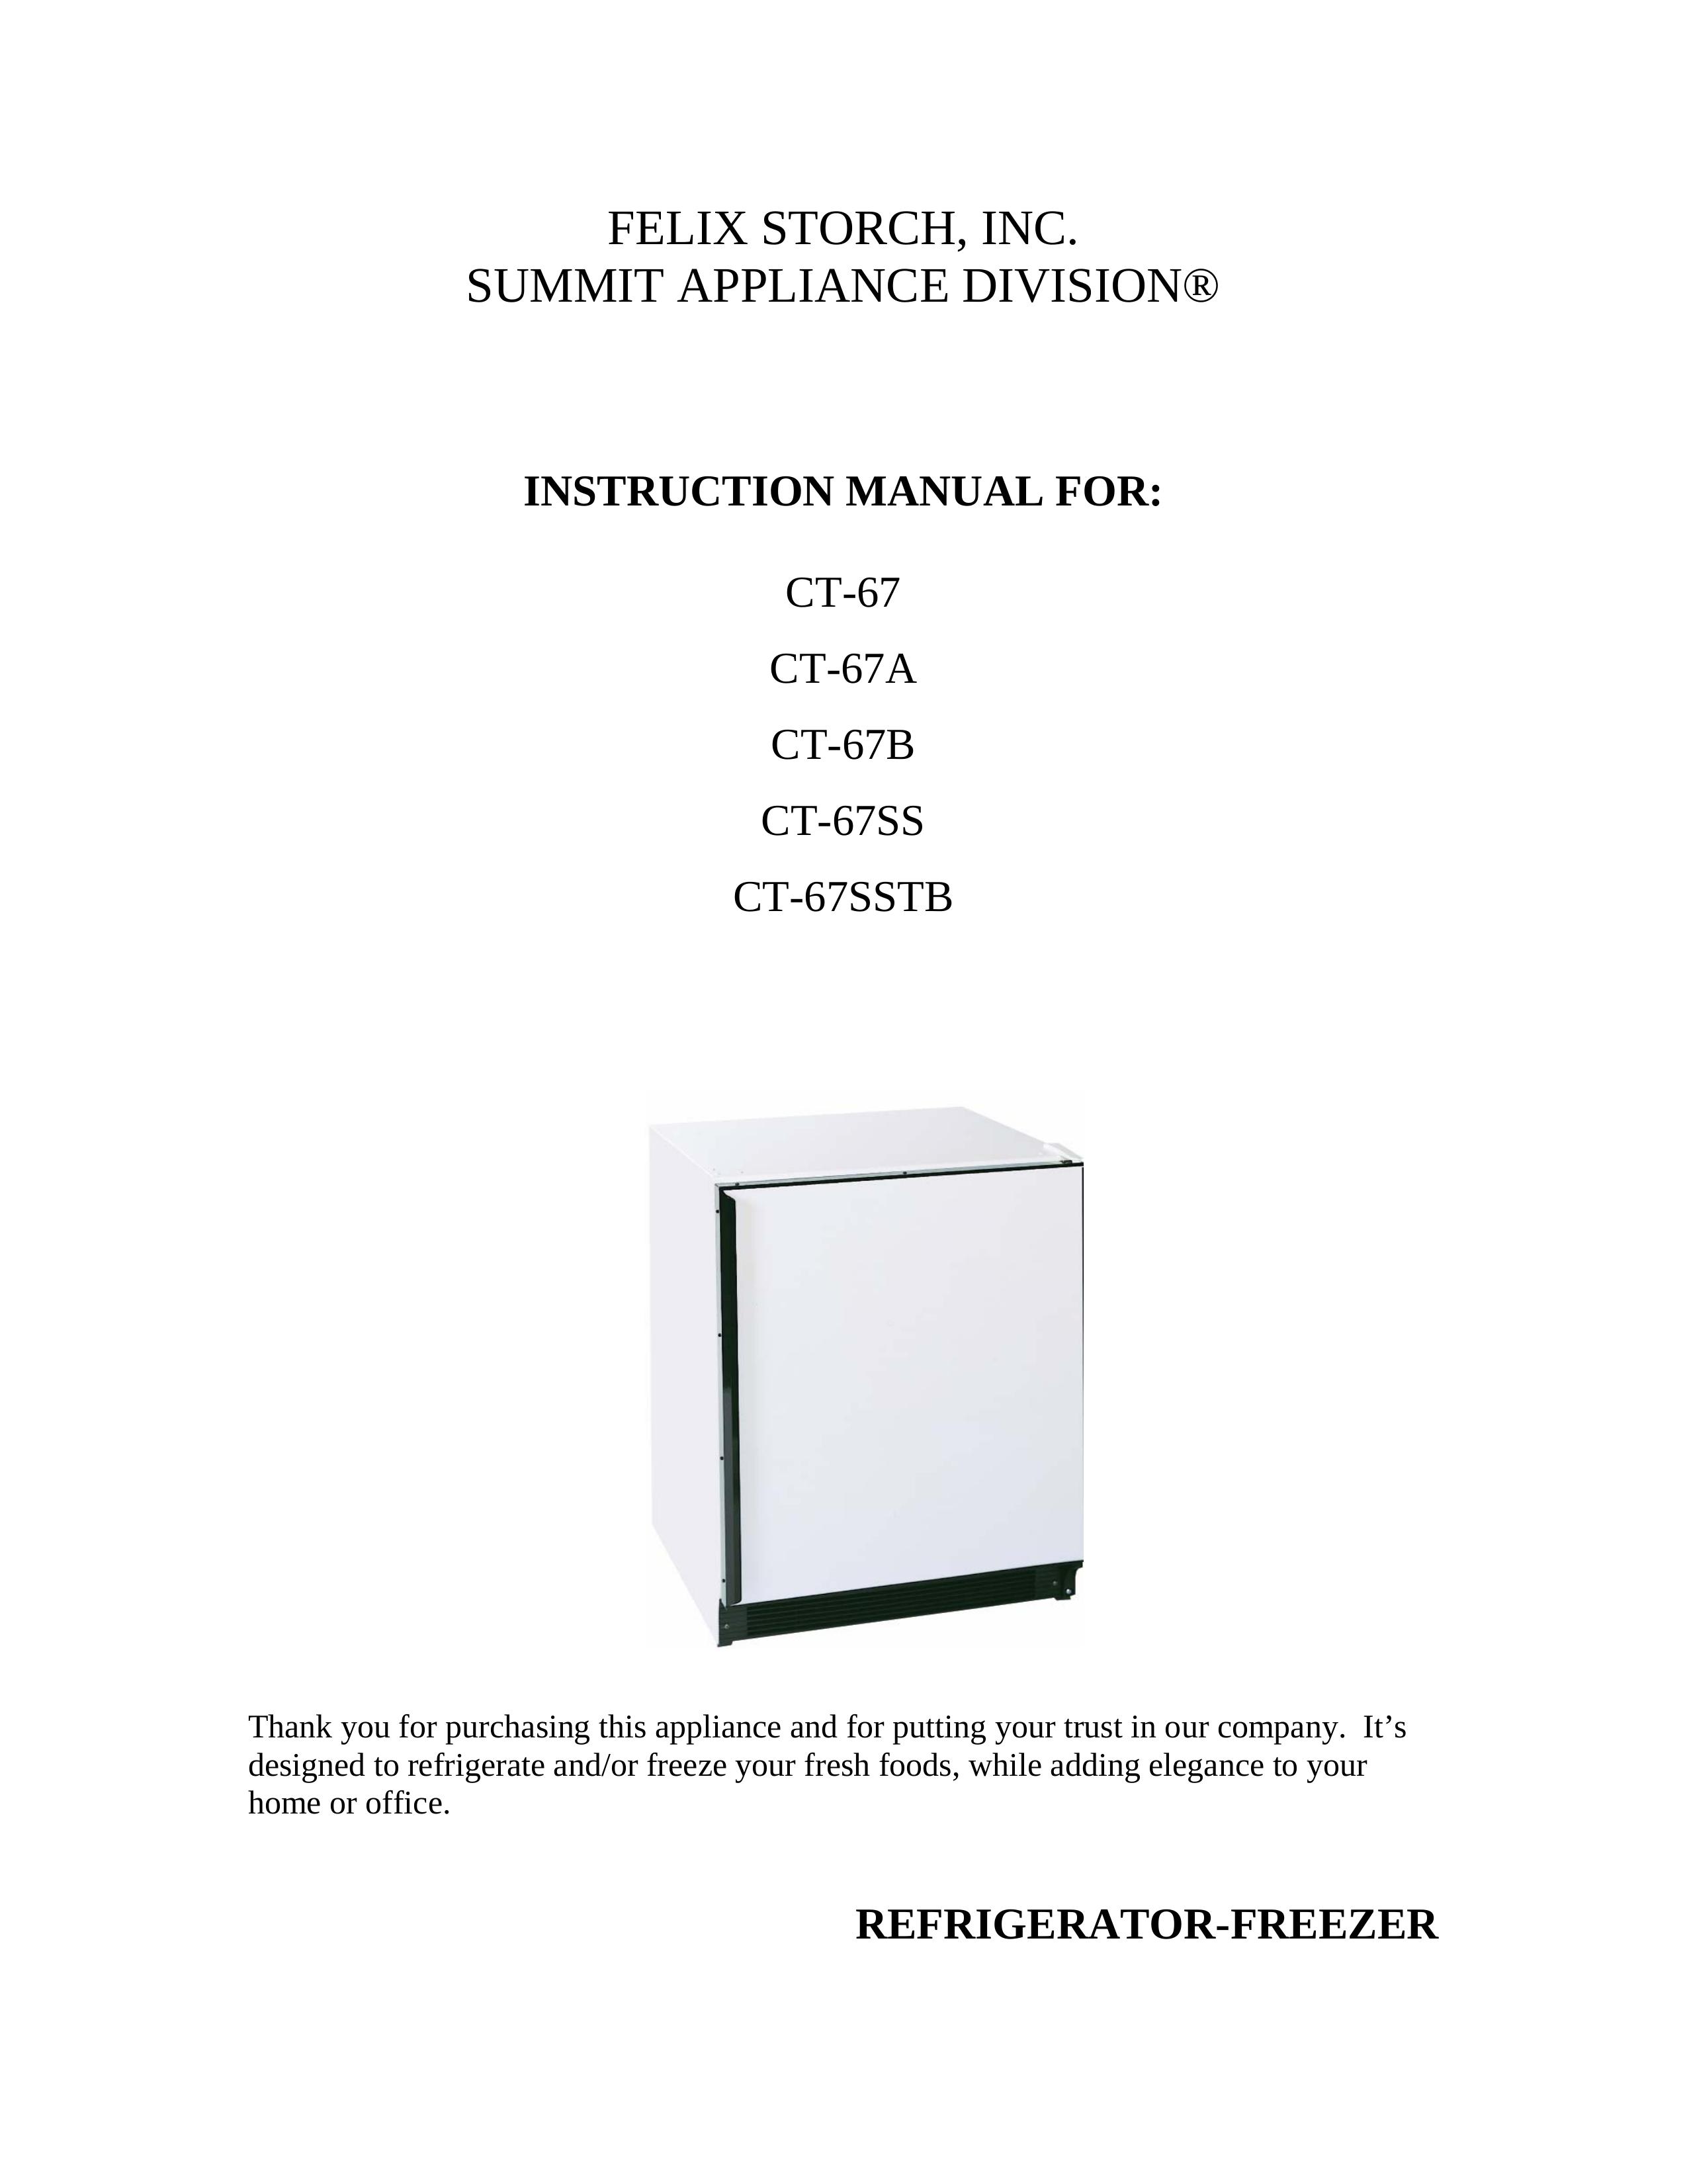 Summit CT-67SSTB Refrigerator User Manual